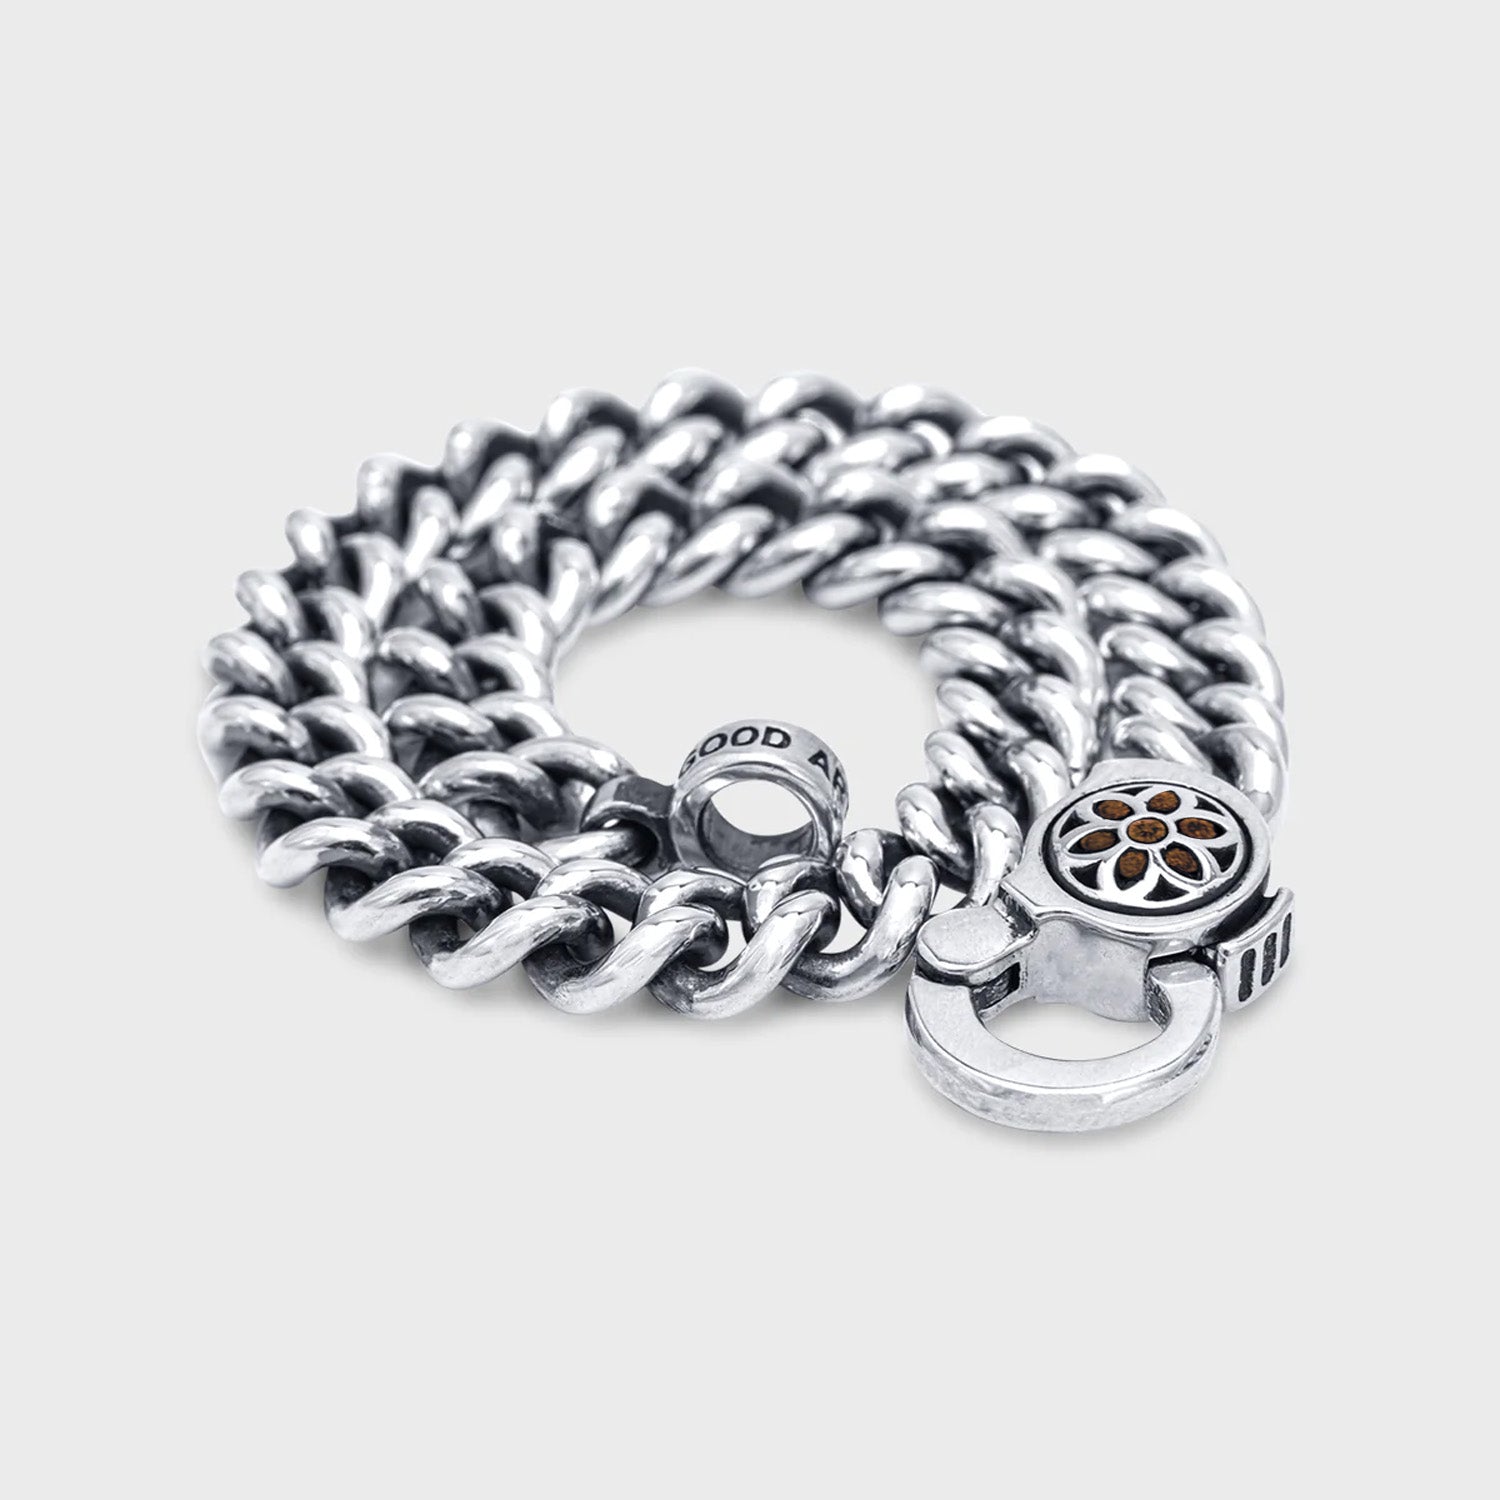 Curb Chain Bracelet - A